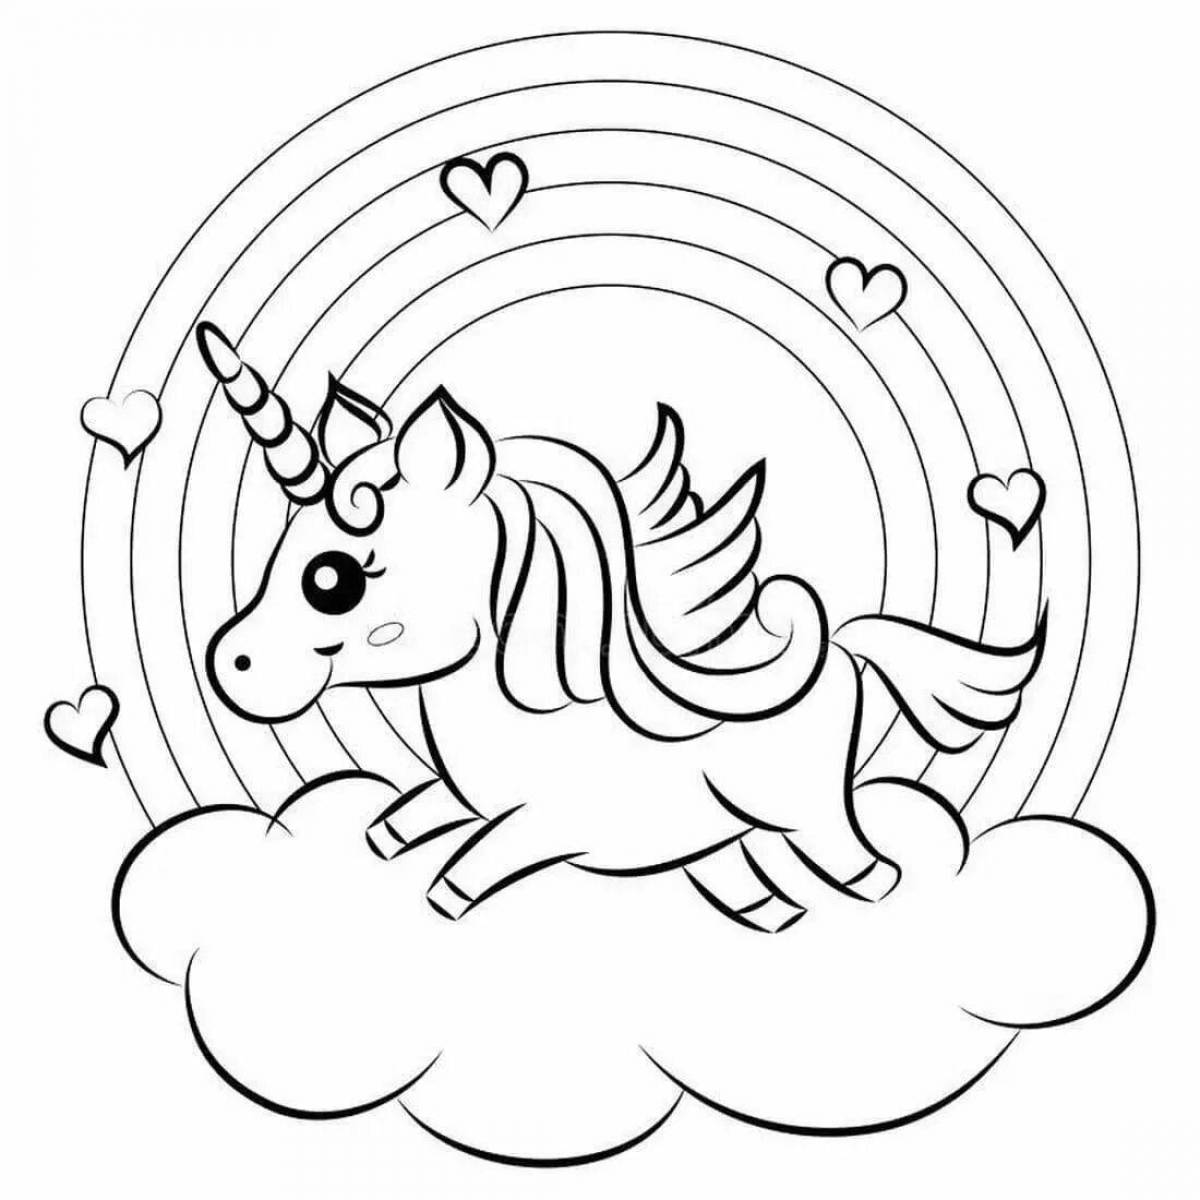 Adorable baby unicorn coloring book